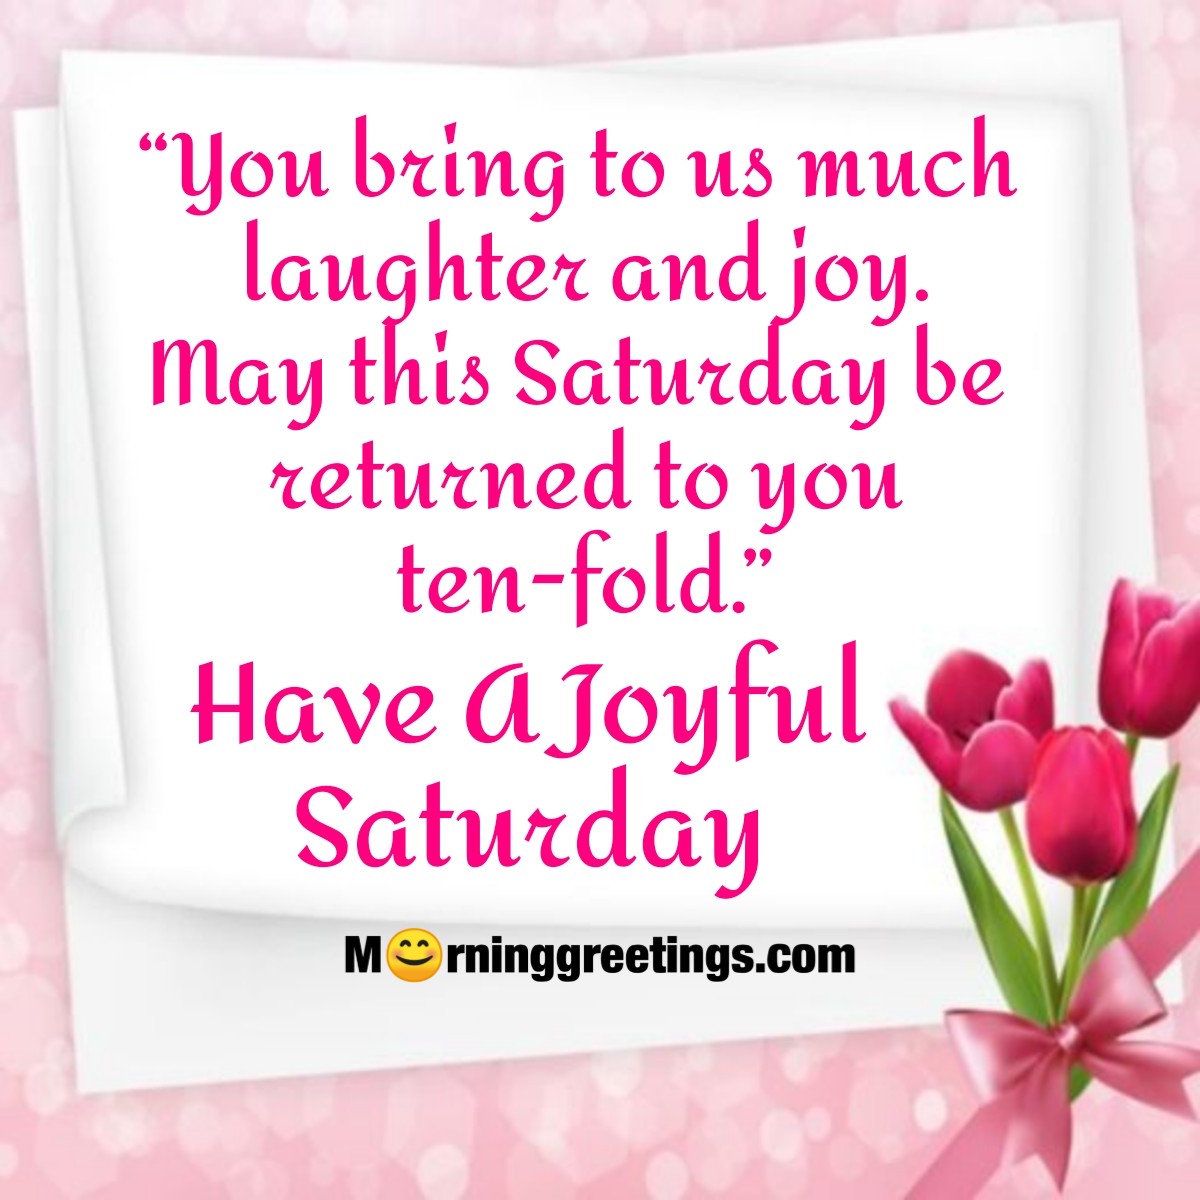 Have A Joyful Saturday